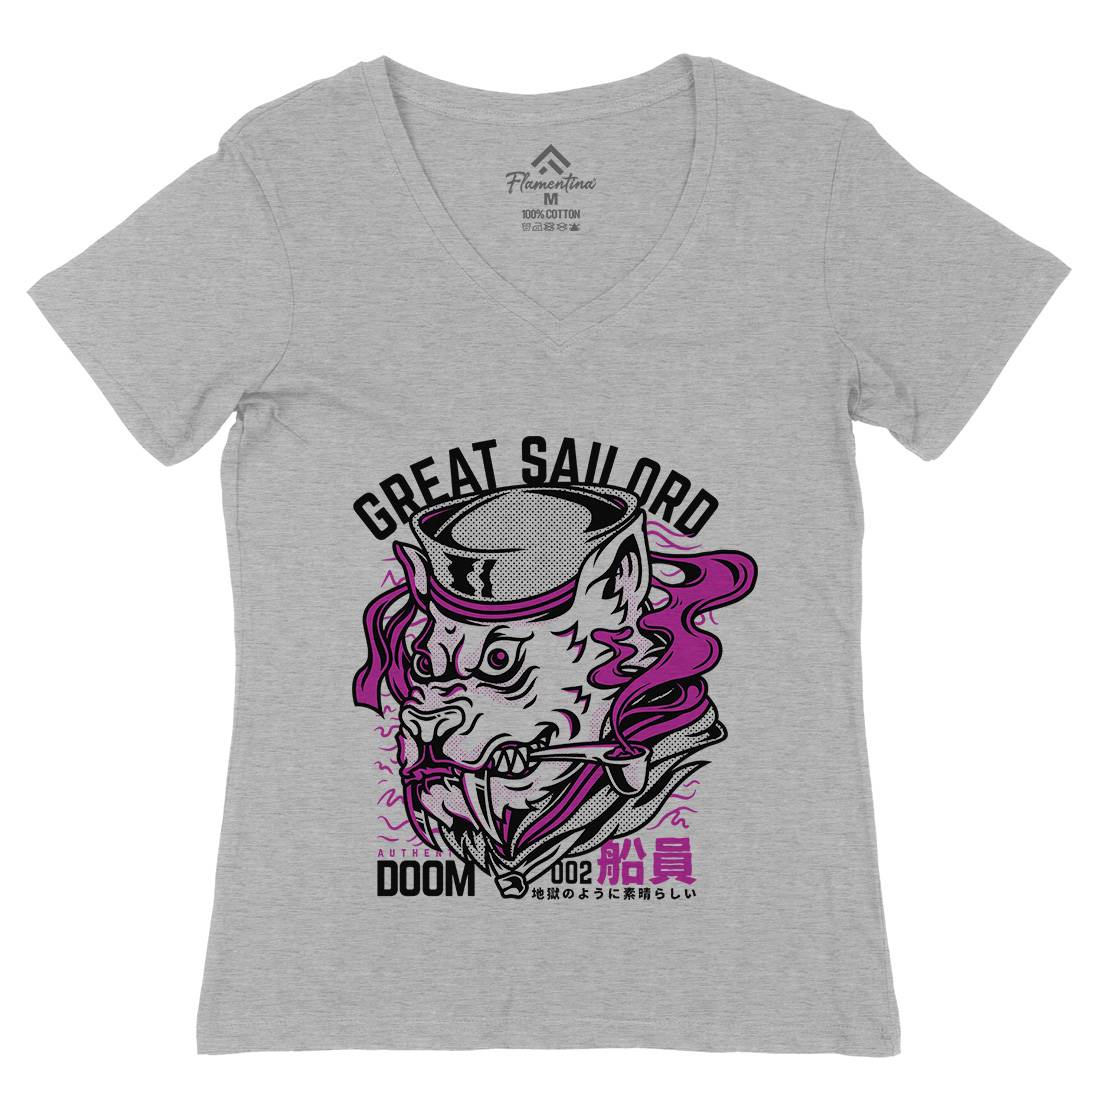 Great Sailord Womens Organic V-Neck T-Shirt Navy D601